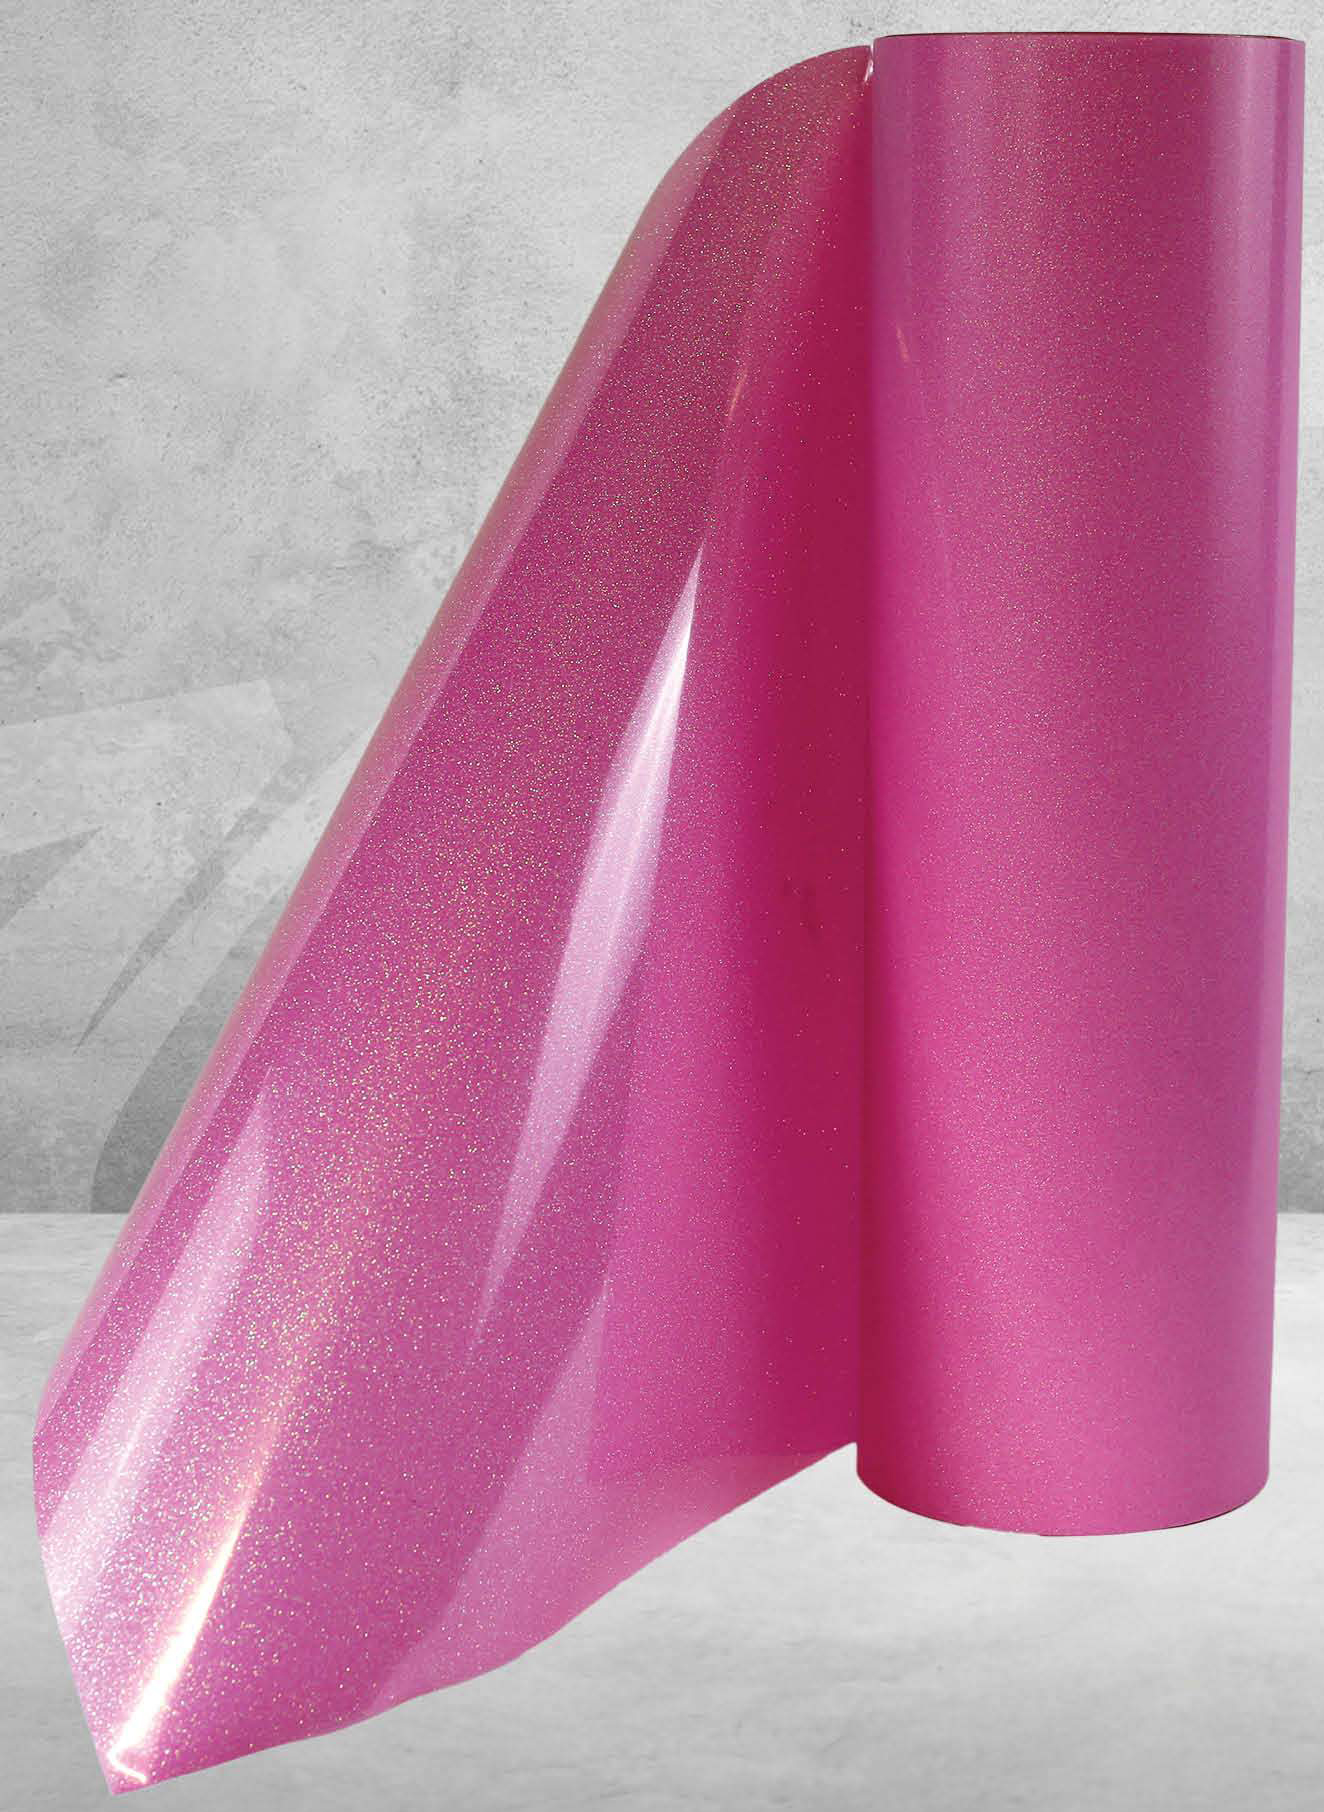 GlitterFlexULTRA Holo Pink - Specialty Materials GlitterFlex Ultra Heat Transfer Film